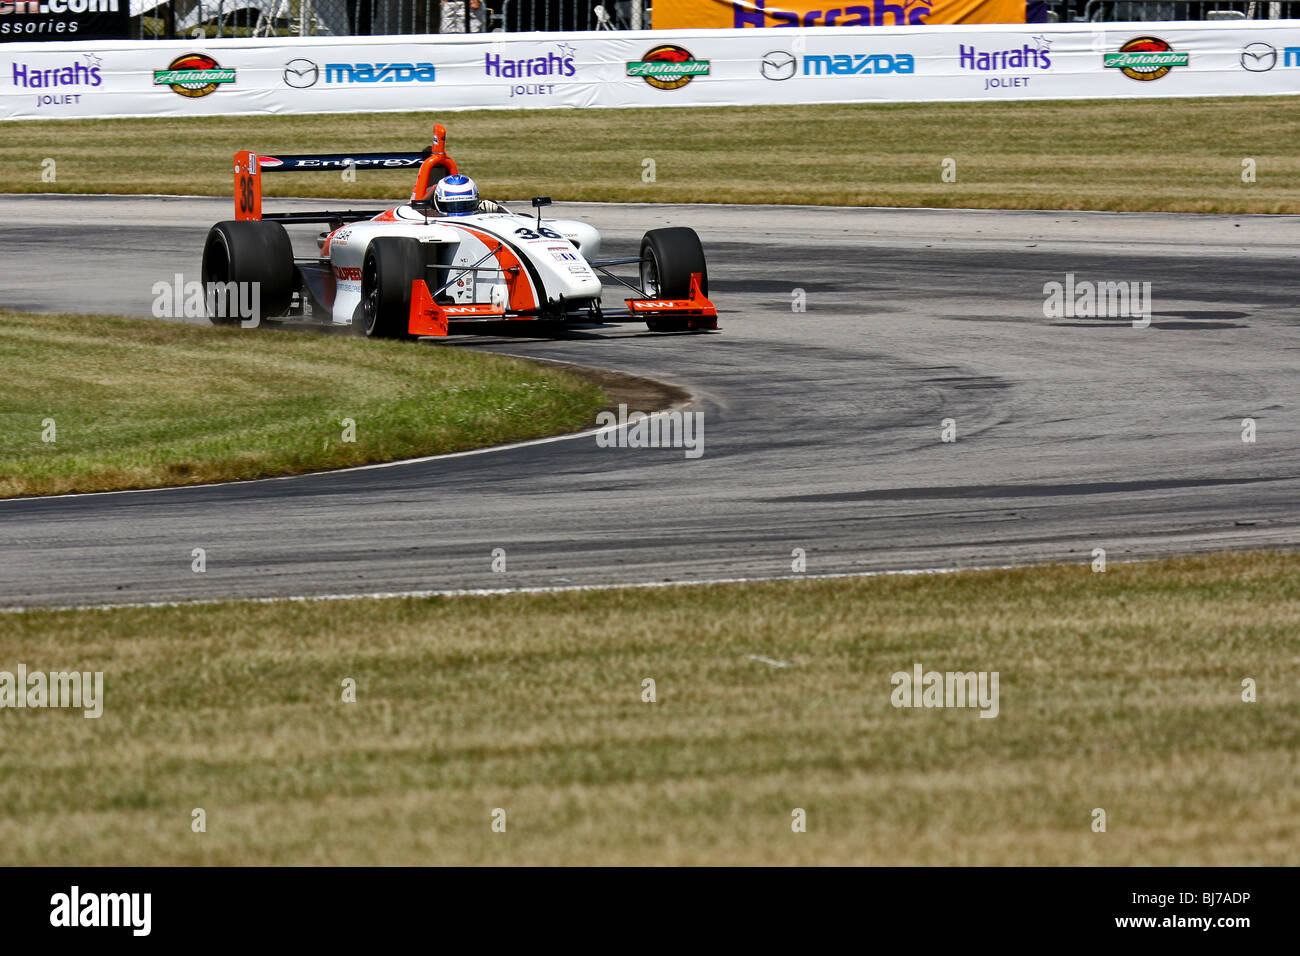 Atlantic Championship Autobahn Grand Prix Cooper Mazda IMSA Racing Stock Photo